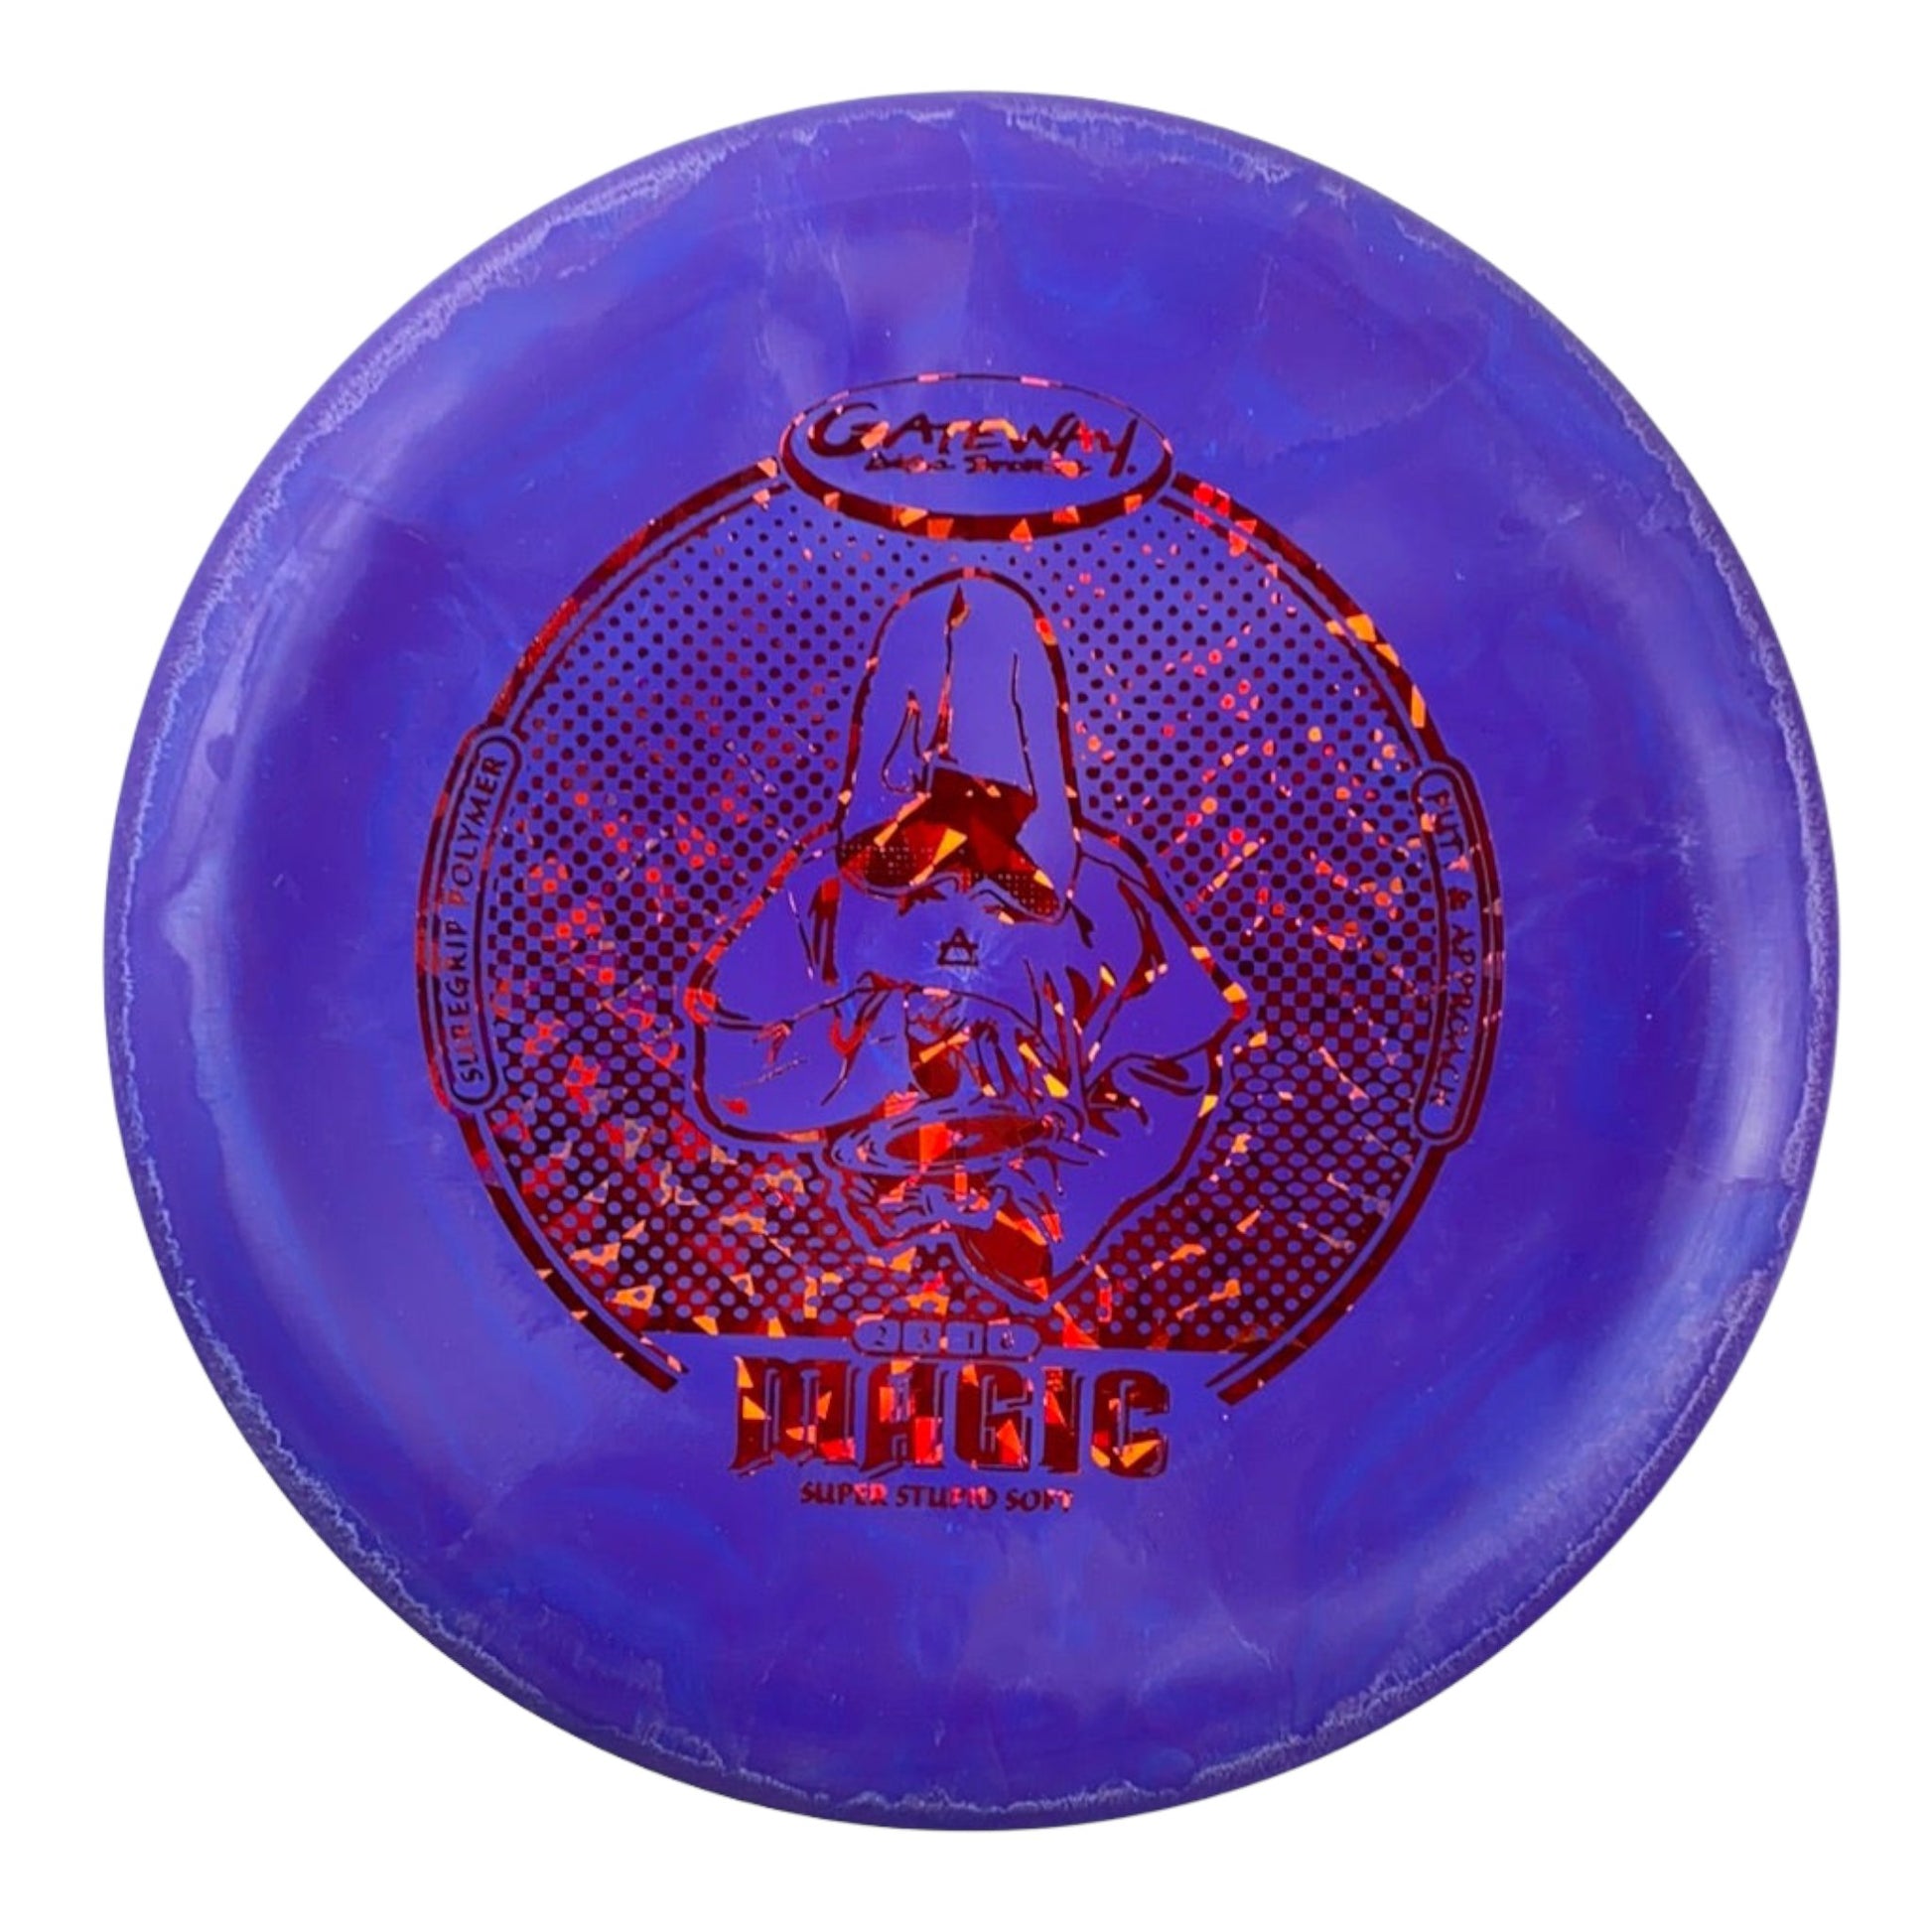 Gateway Disc Sports Magic | Super Stupid Soft (SSS) | Purple/Red 171-172g Disc Golf